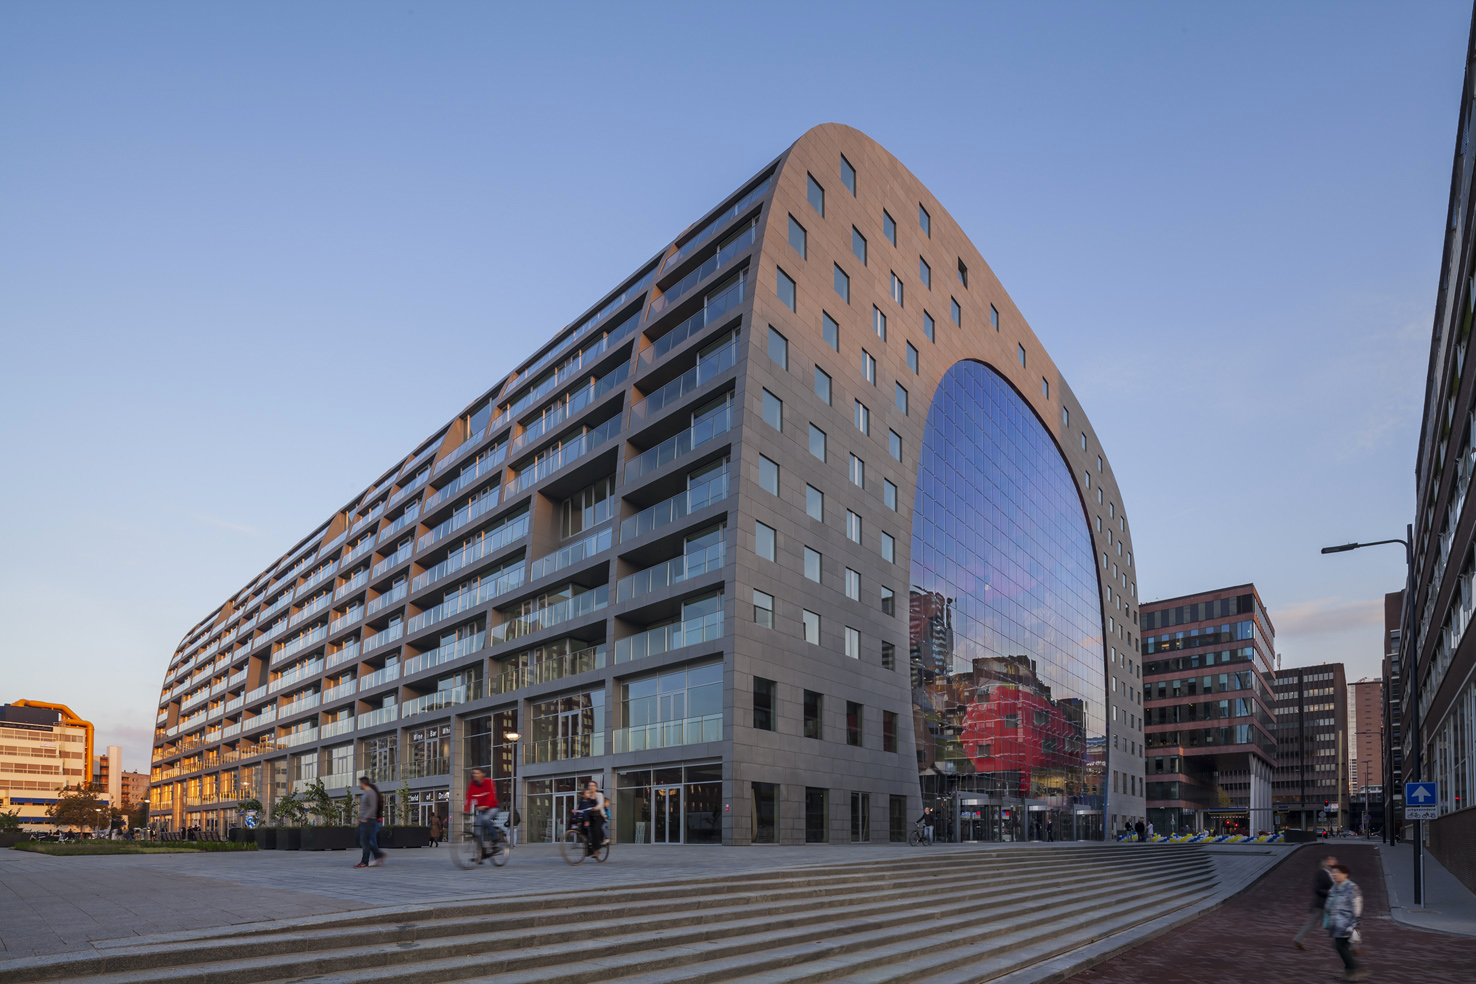 Markthal Rotterdam - Estaters